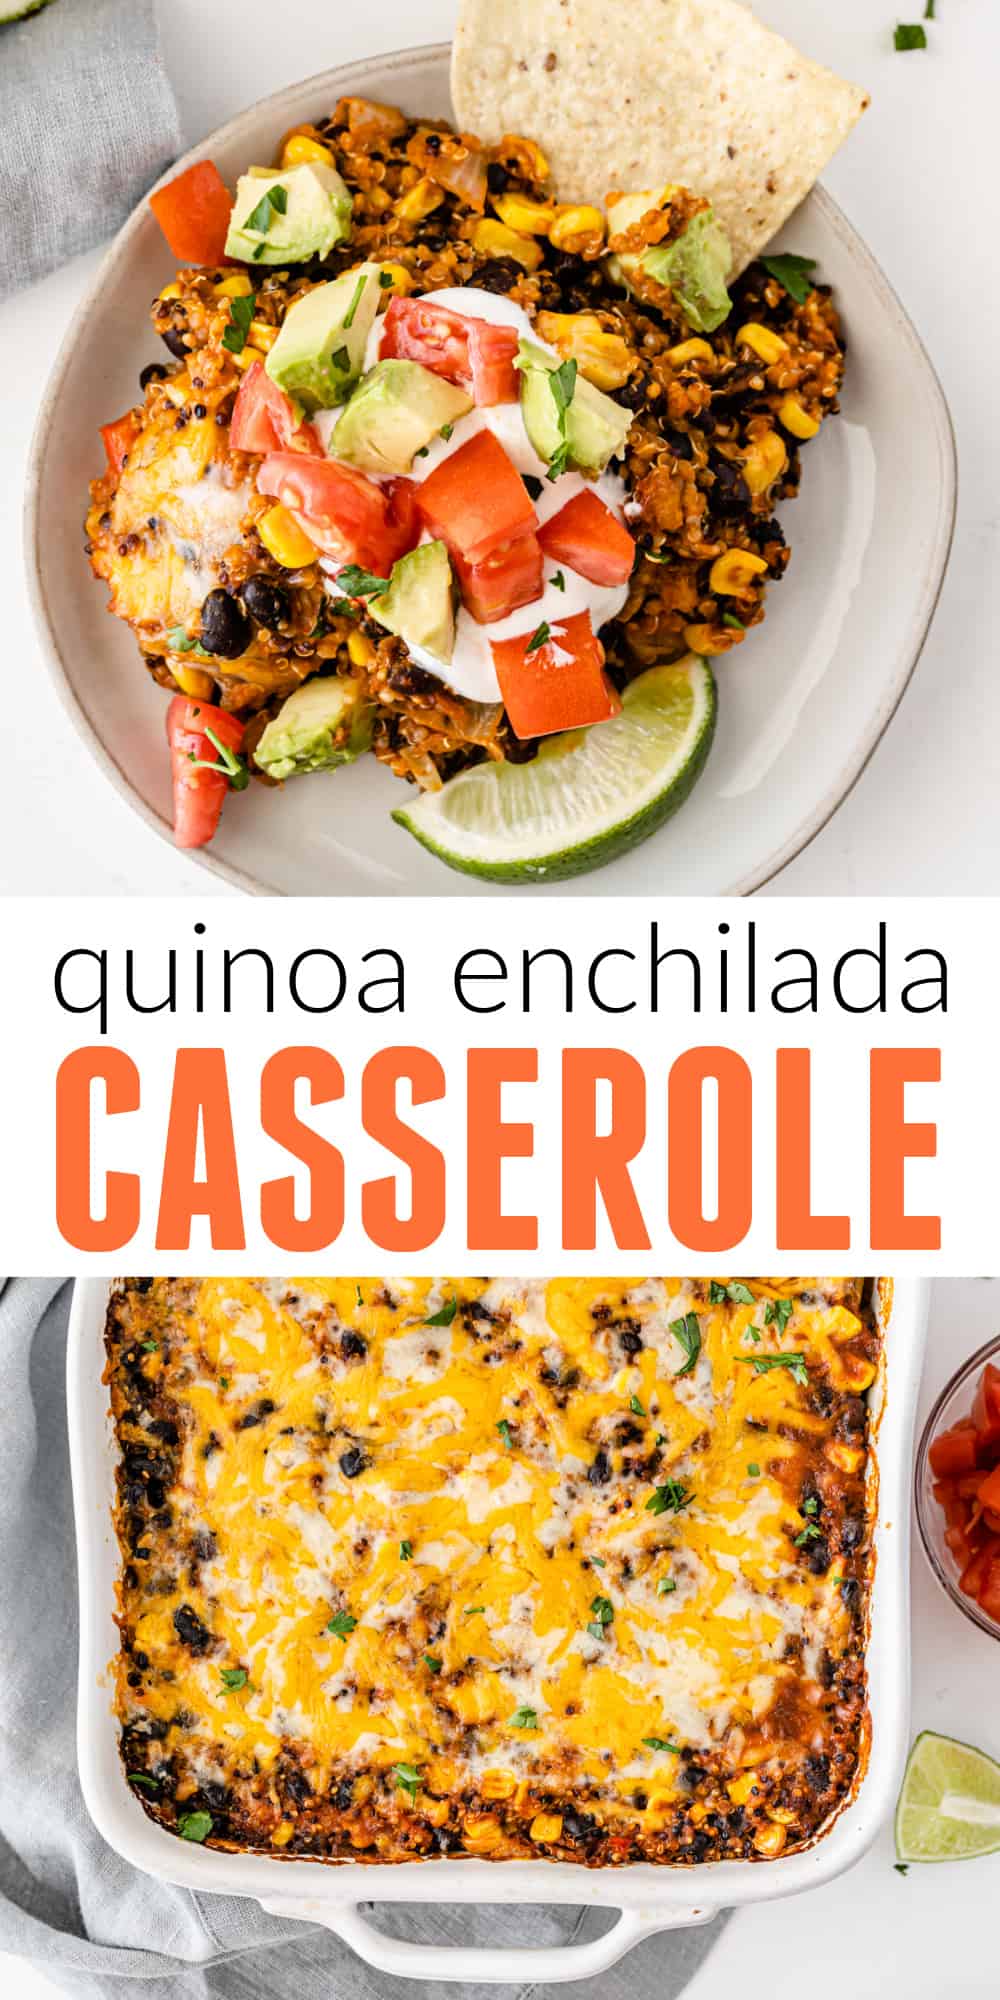 image with text "quinoa enchilada casserole"